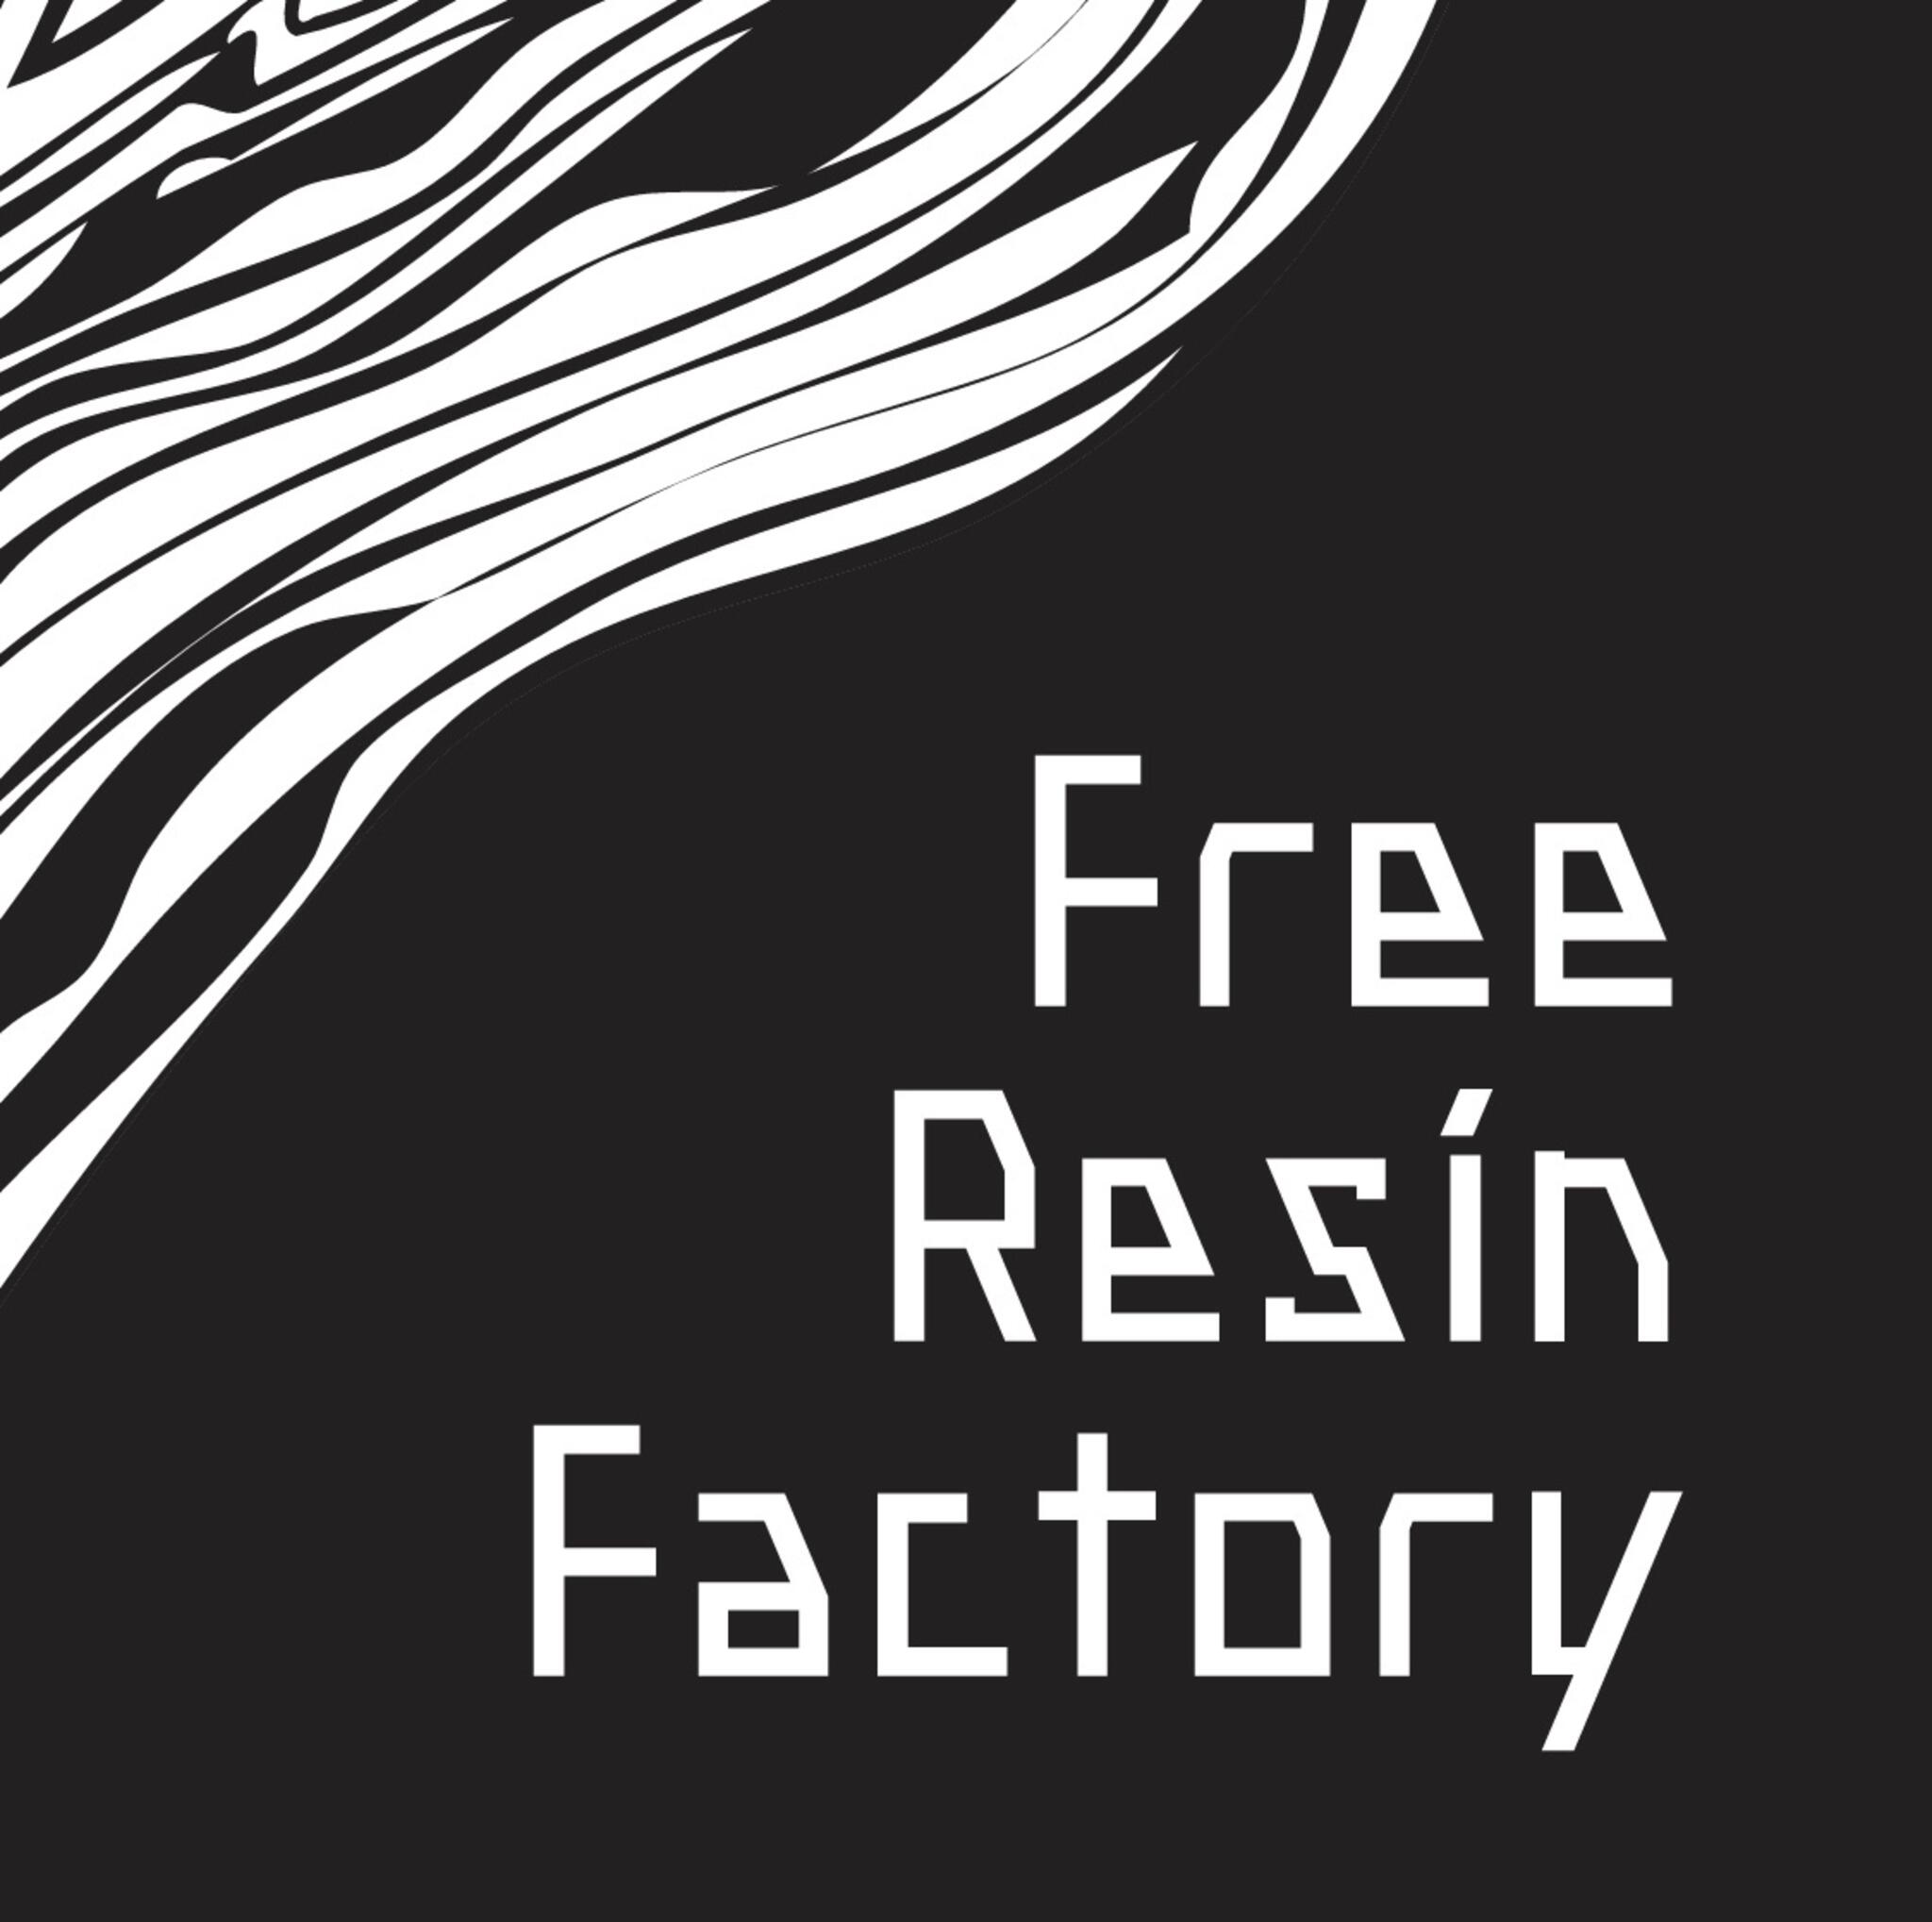 Free Resin Factoryの代表写真1